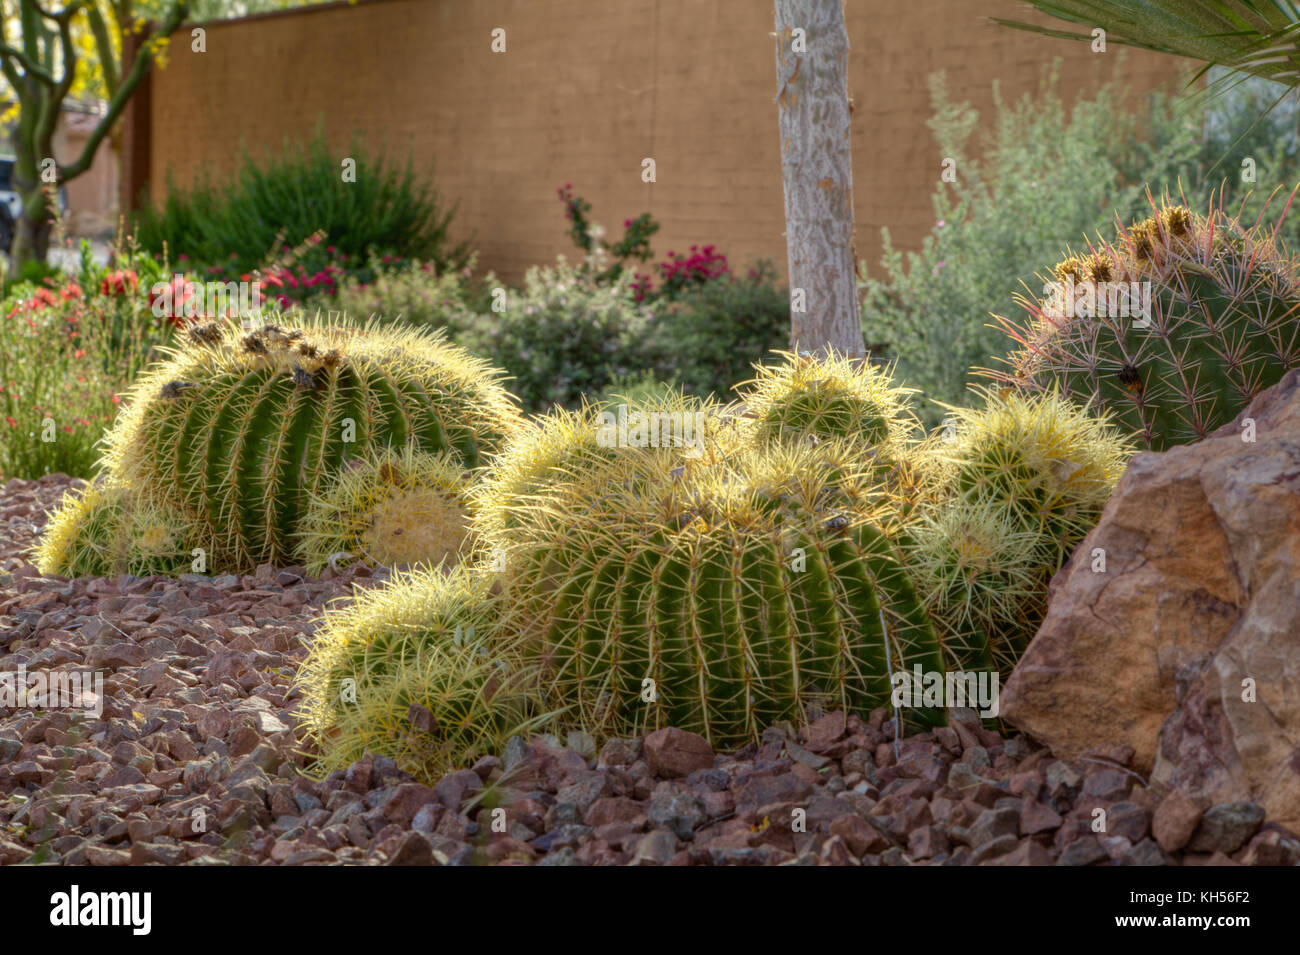 Golden Barrel cactus in un giardino. Foto Stock